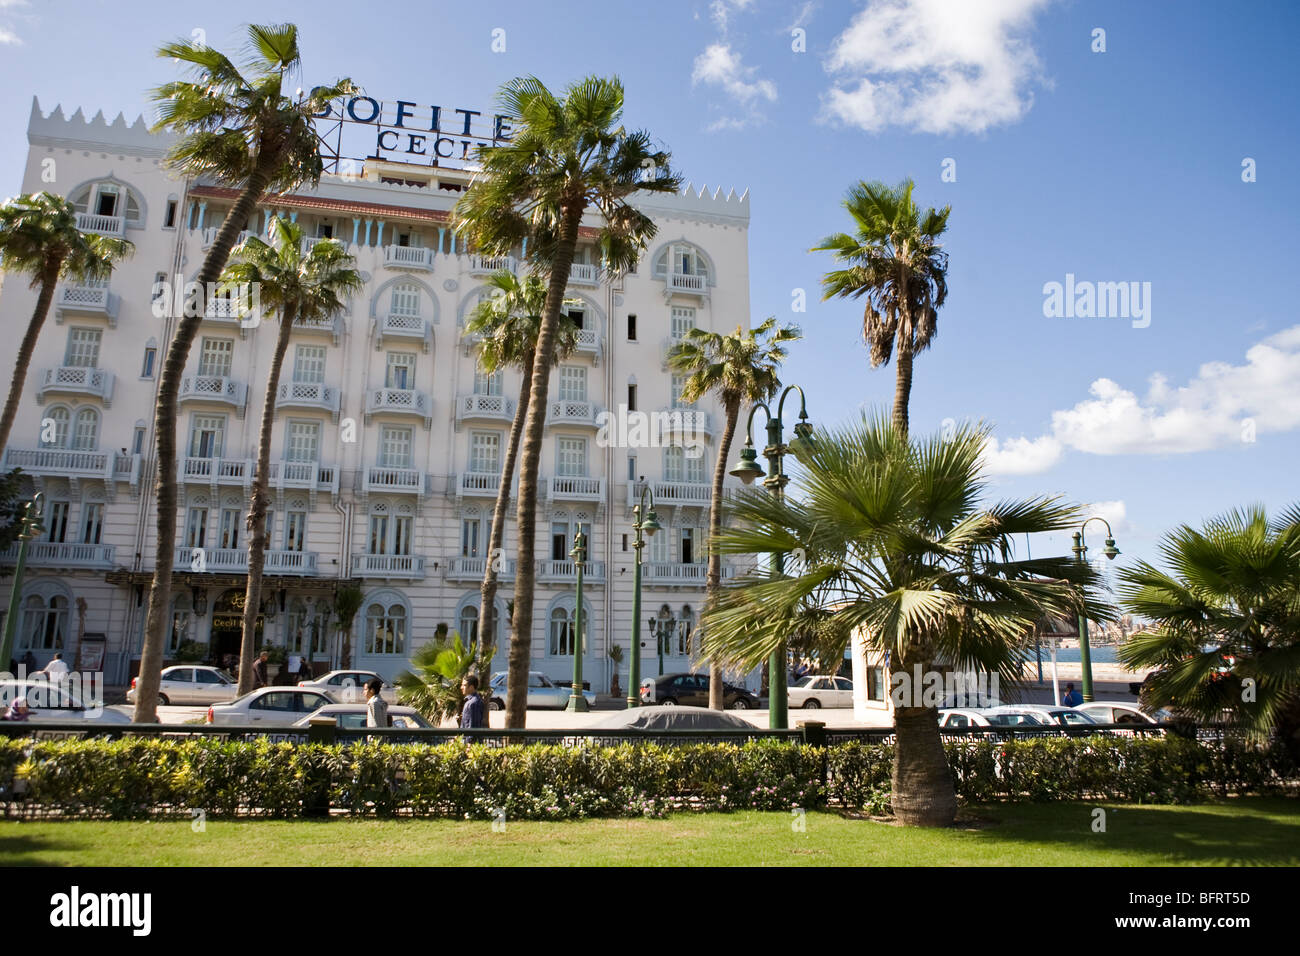 The Sofitel Cecil Hotel on the corniche in Alexandria, Egypt seen from the park Stock Photo